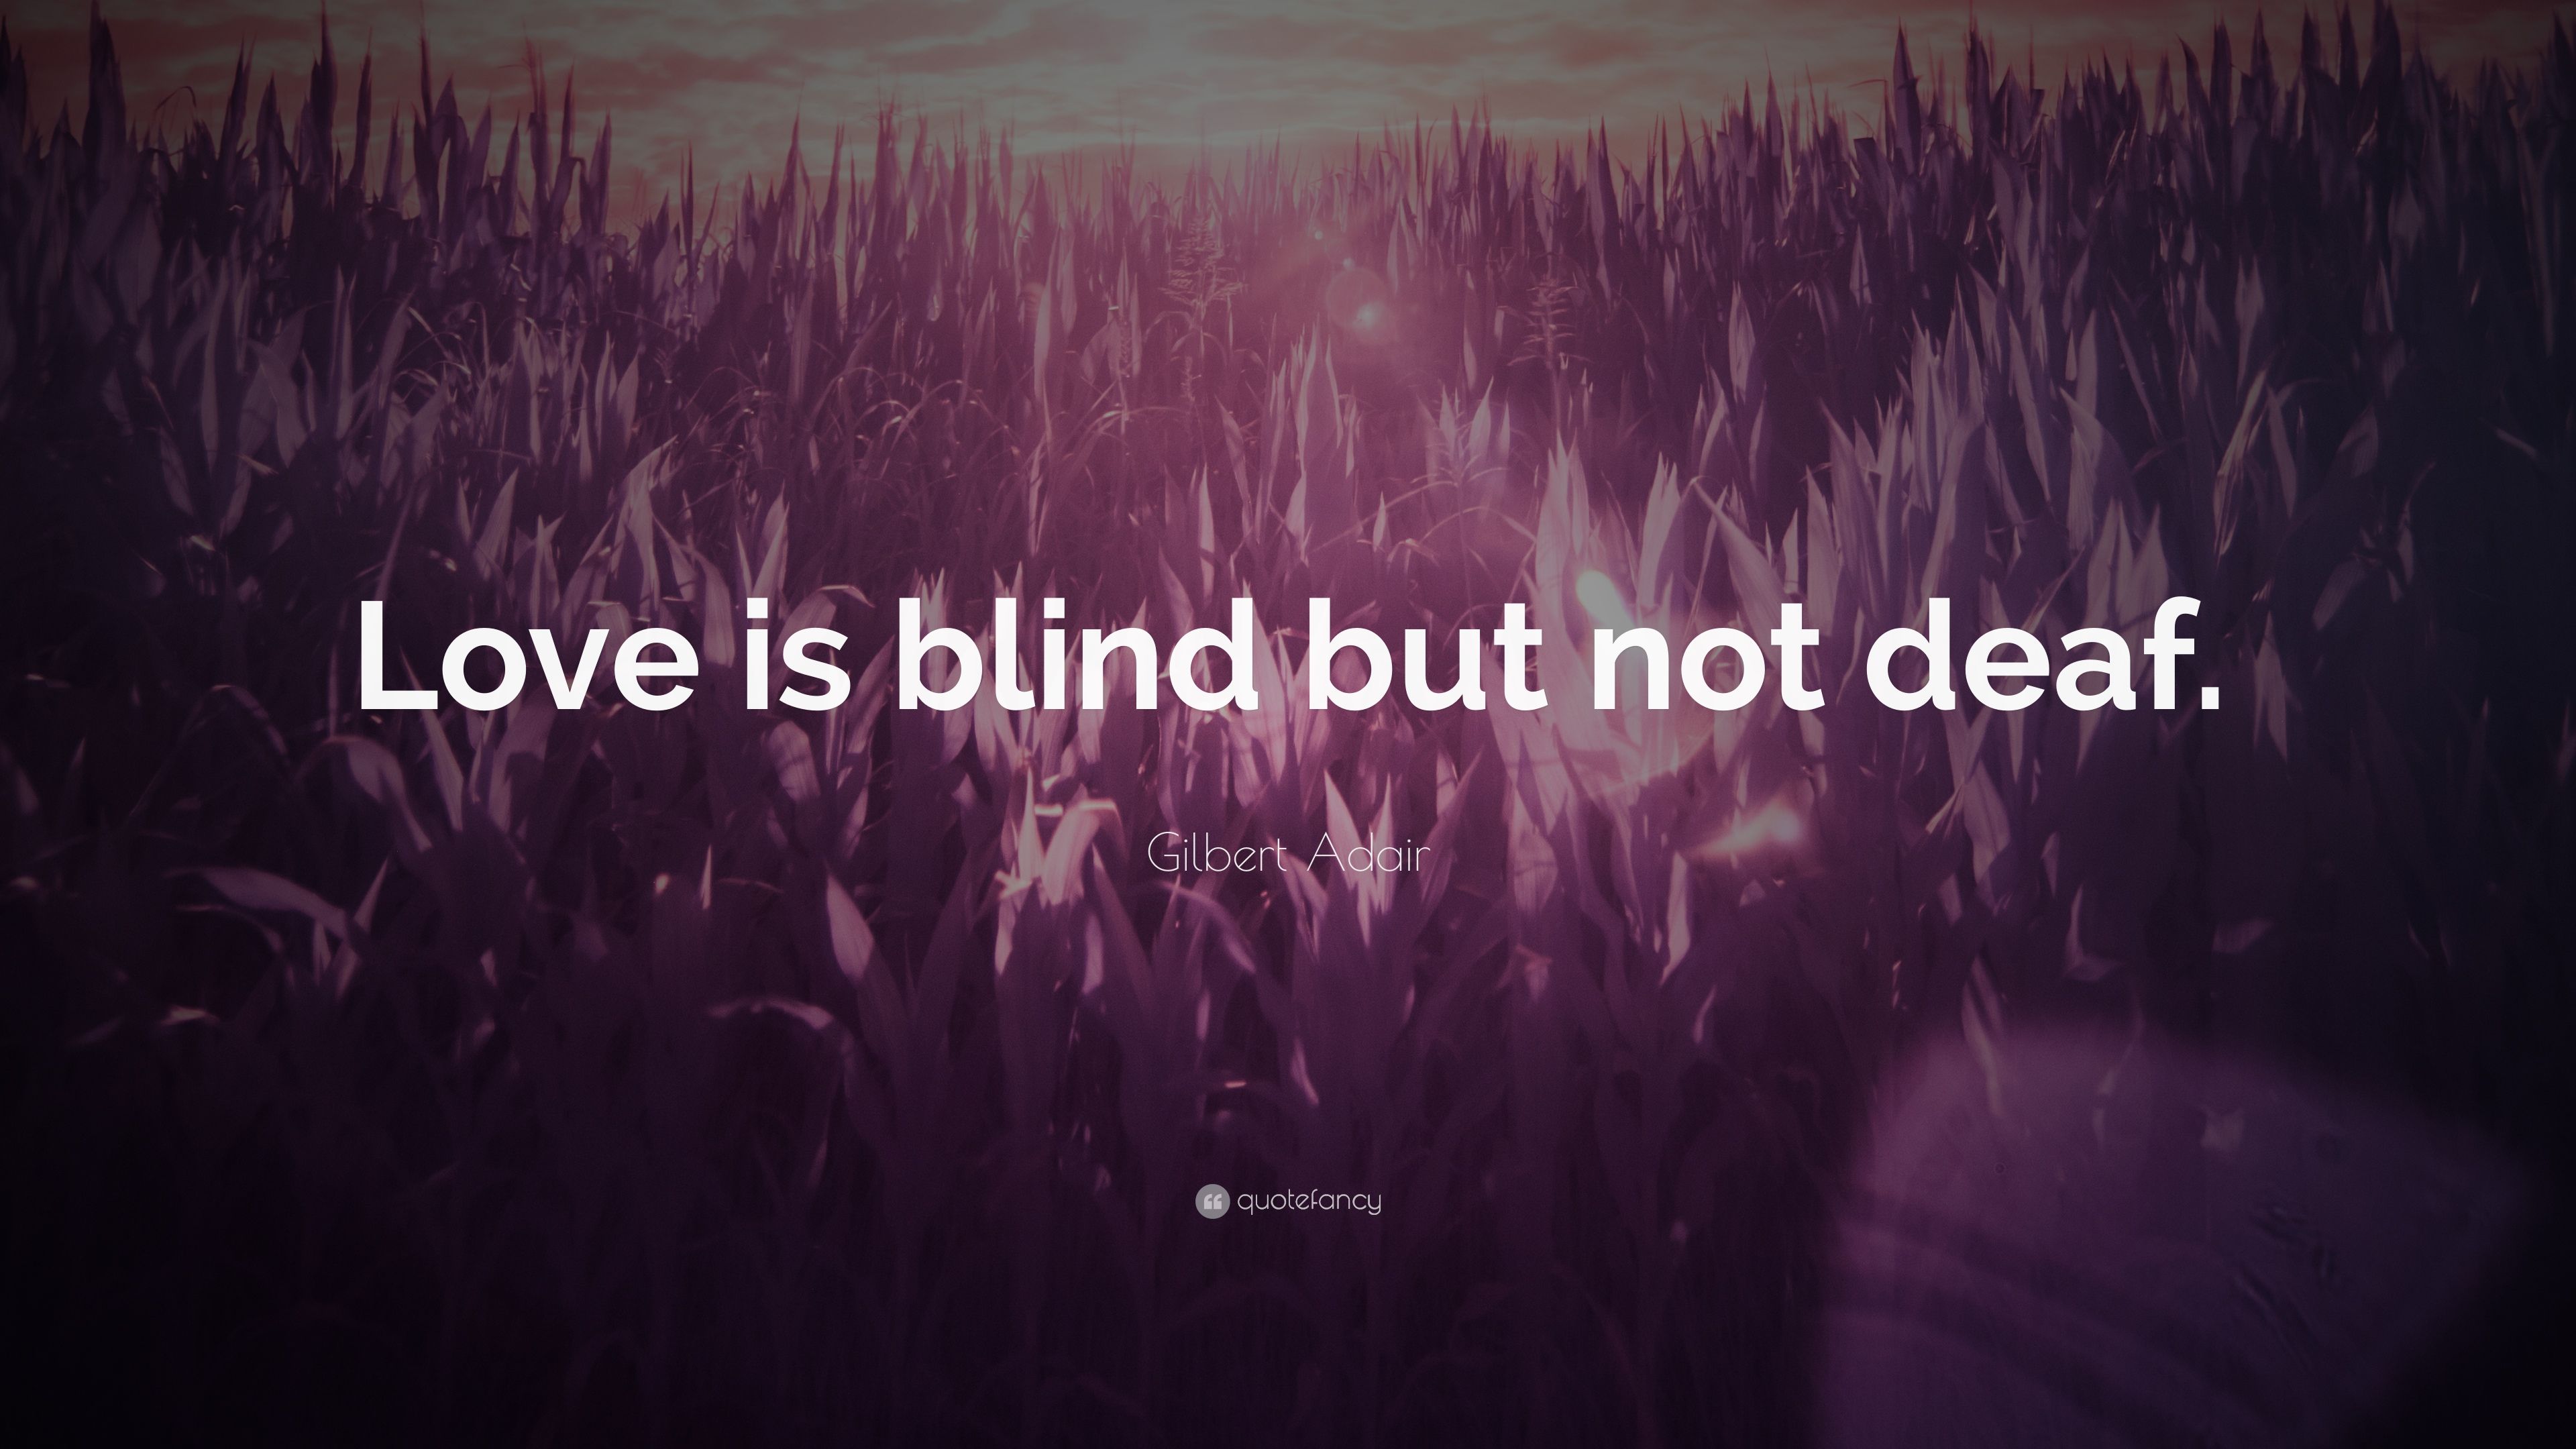 love is blind wallpaper